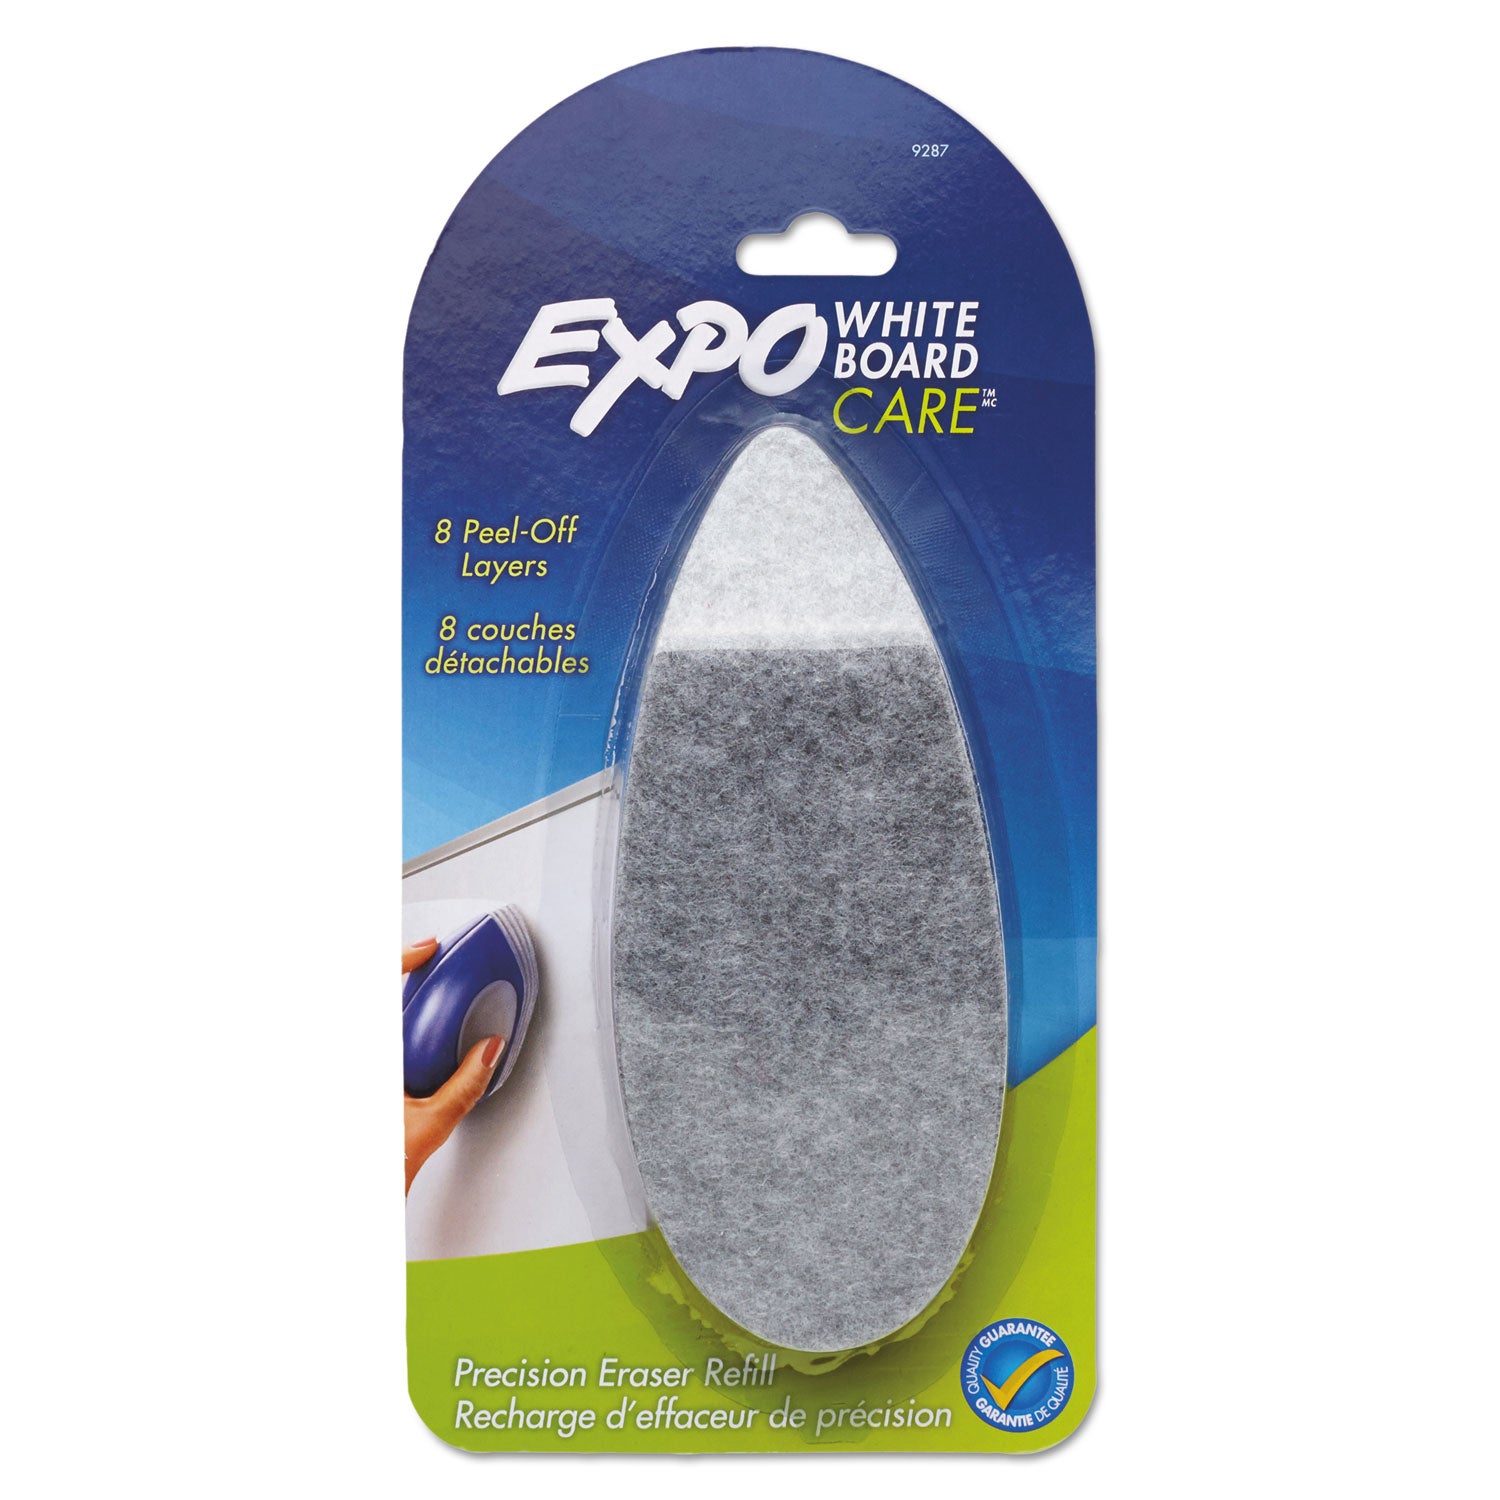 White Board CARE Dry Erase Precision Eraser Refill, Eight Peel-Off Layers, 2.25" x 6 - 